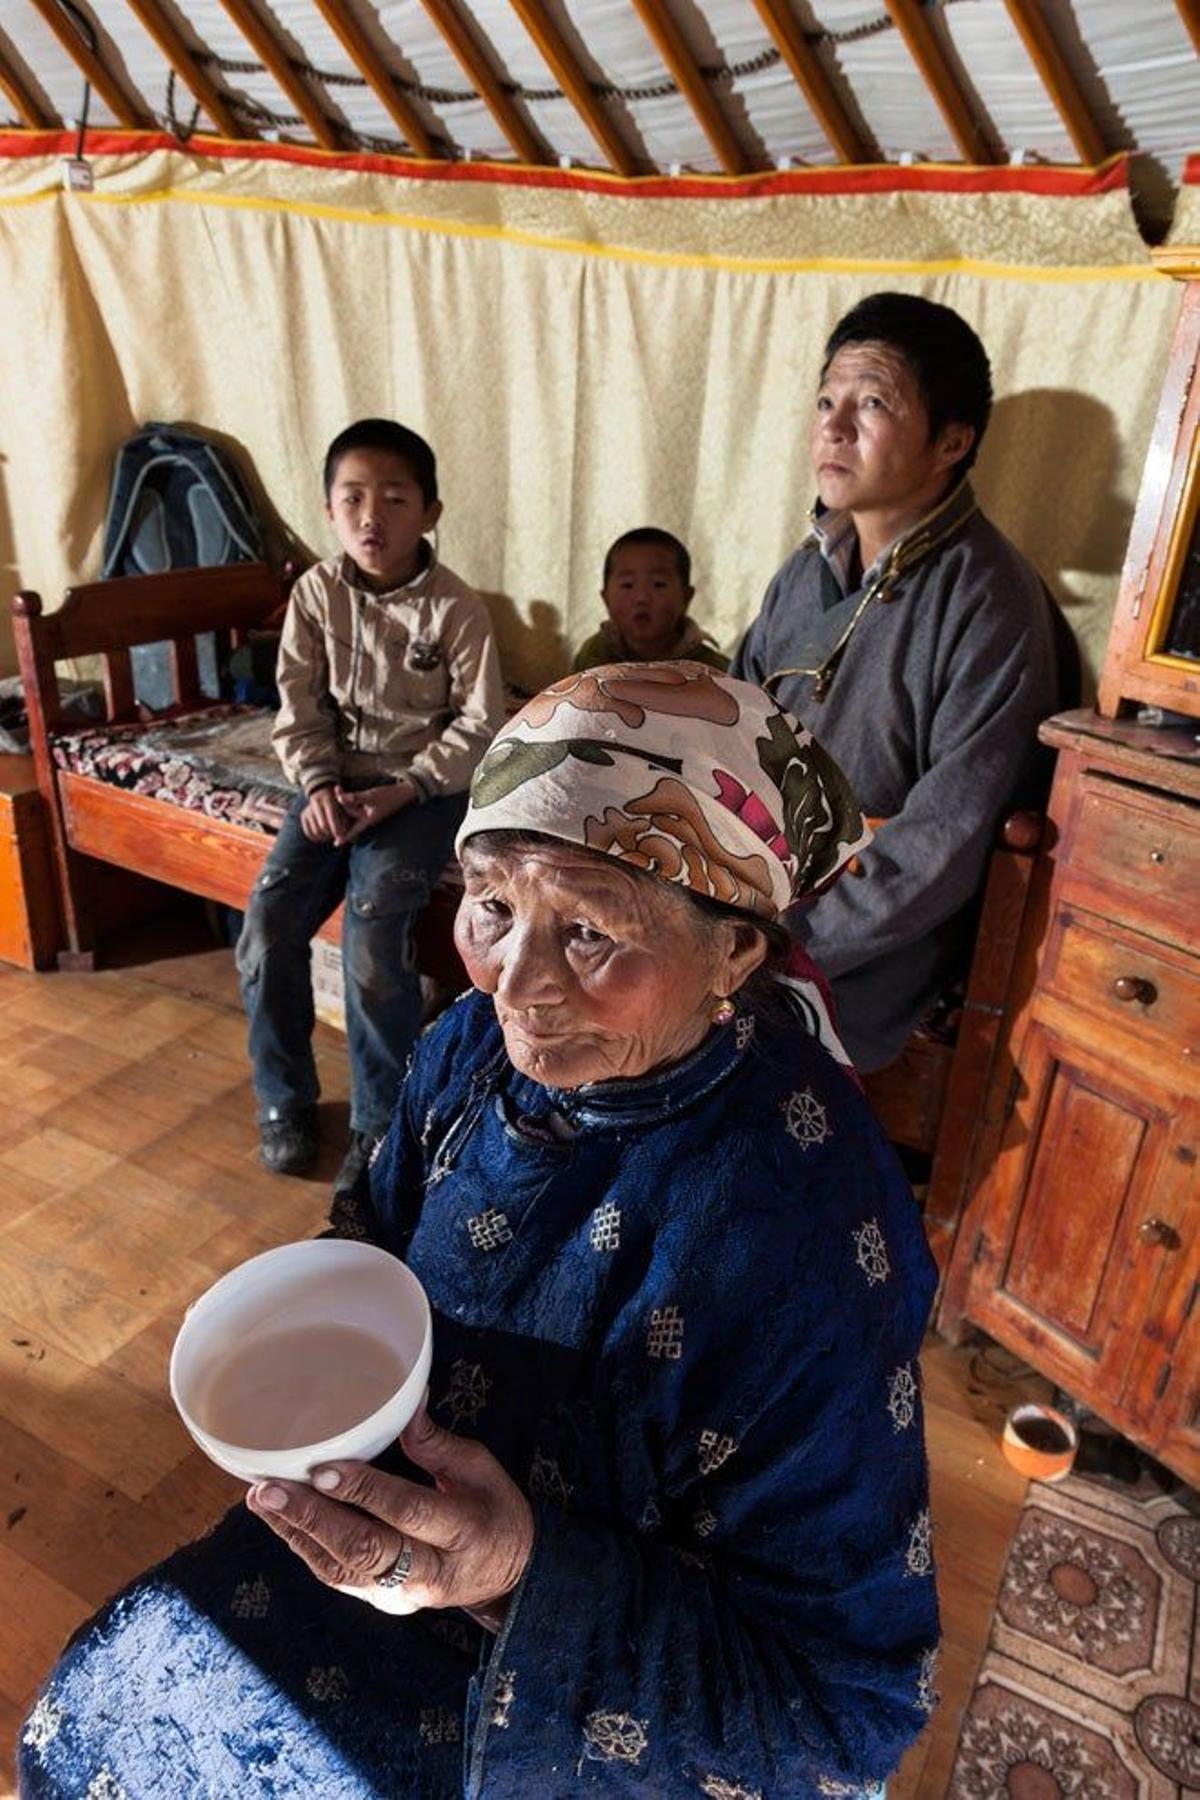 Las hospitalarias familias mongoles agasajan a sus visitantes con leche agria de yak.